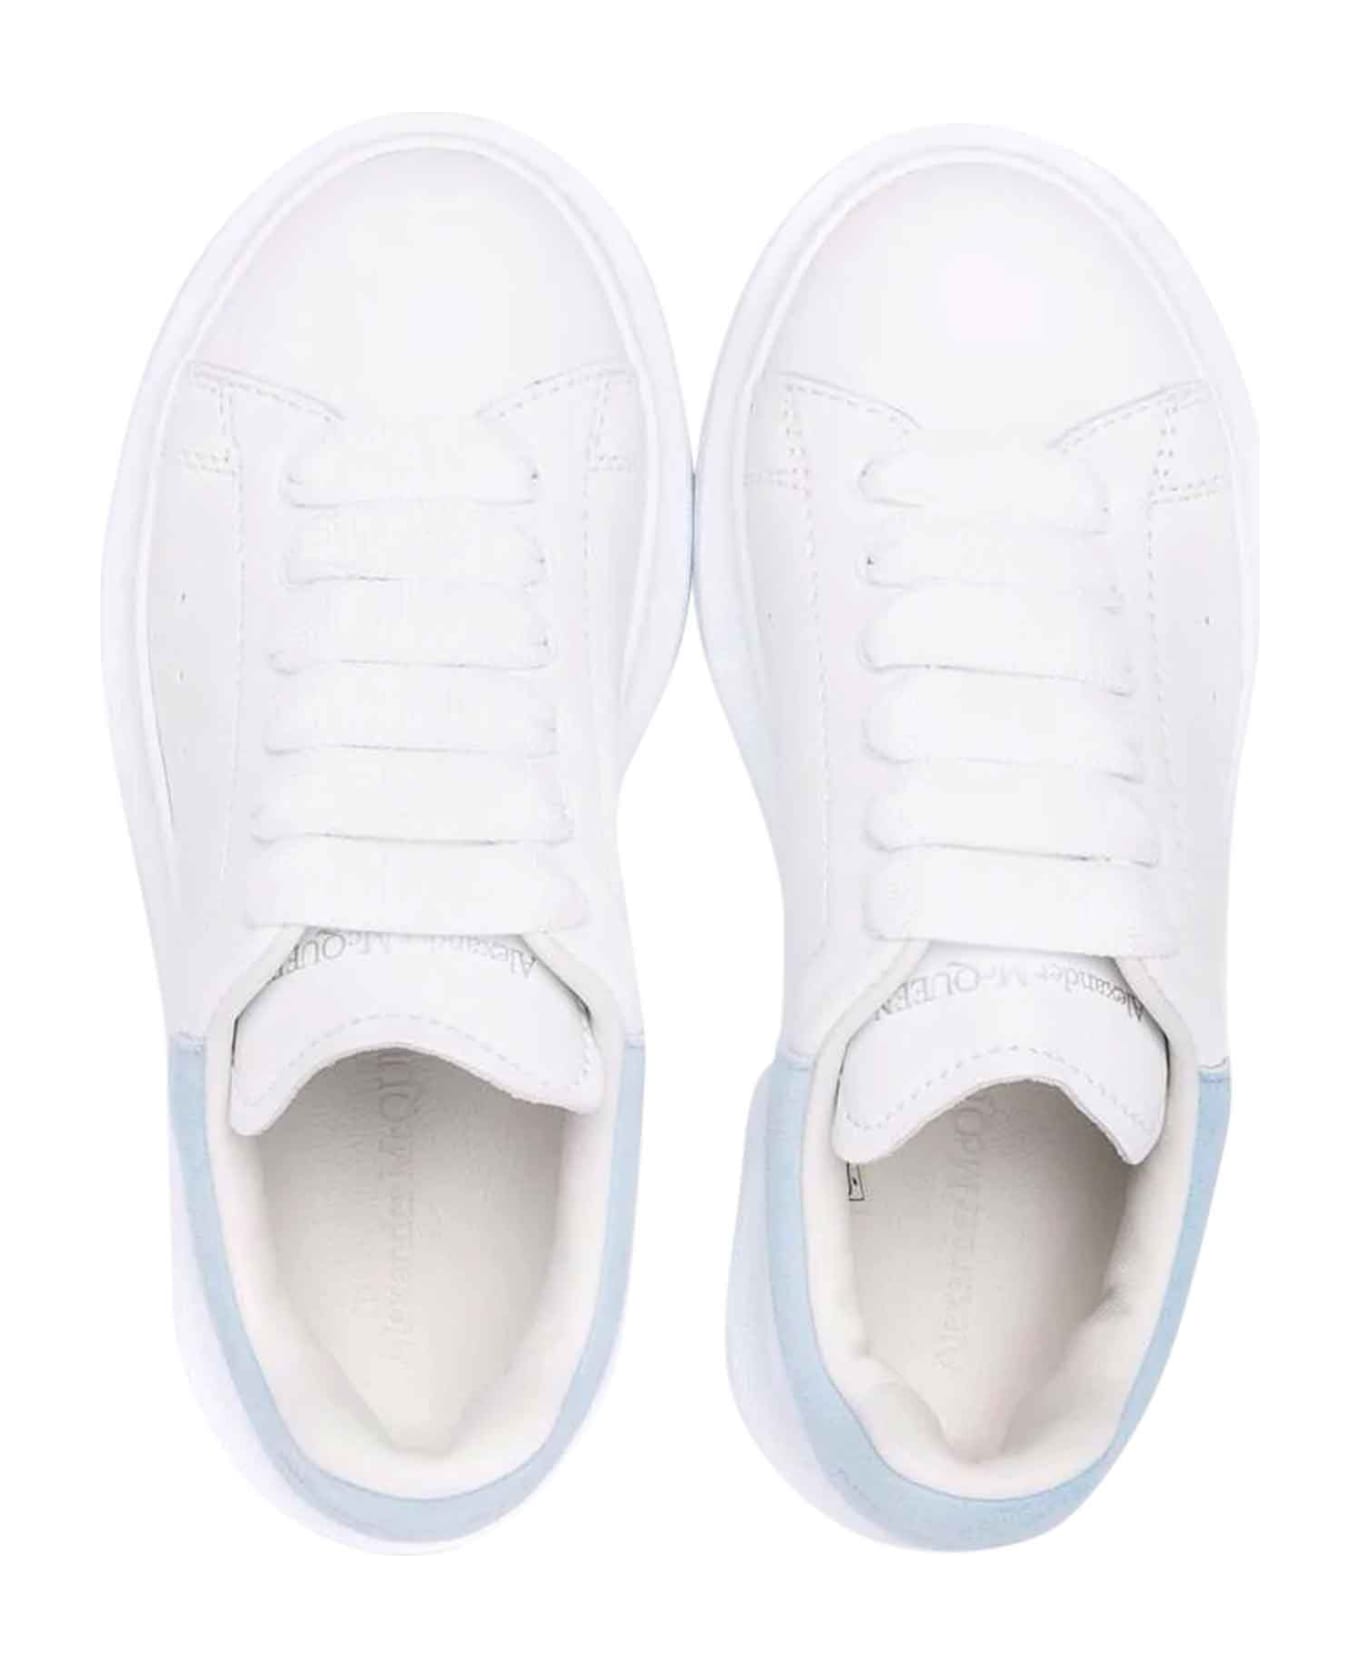 Alexander McQueen Kids Unisex White Oversized Sneakers - Bianco/celeste